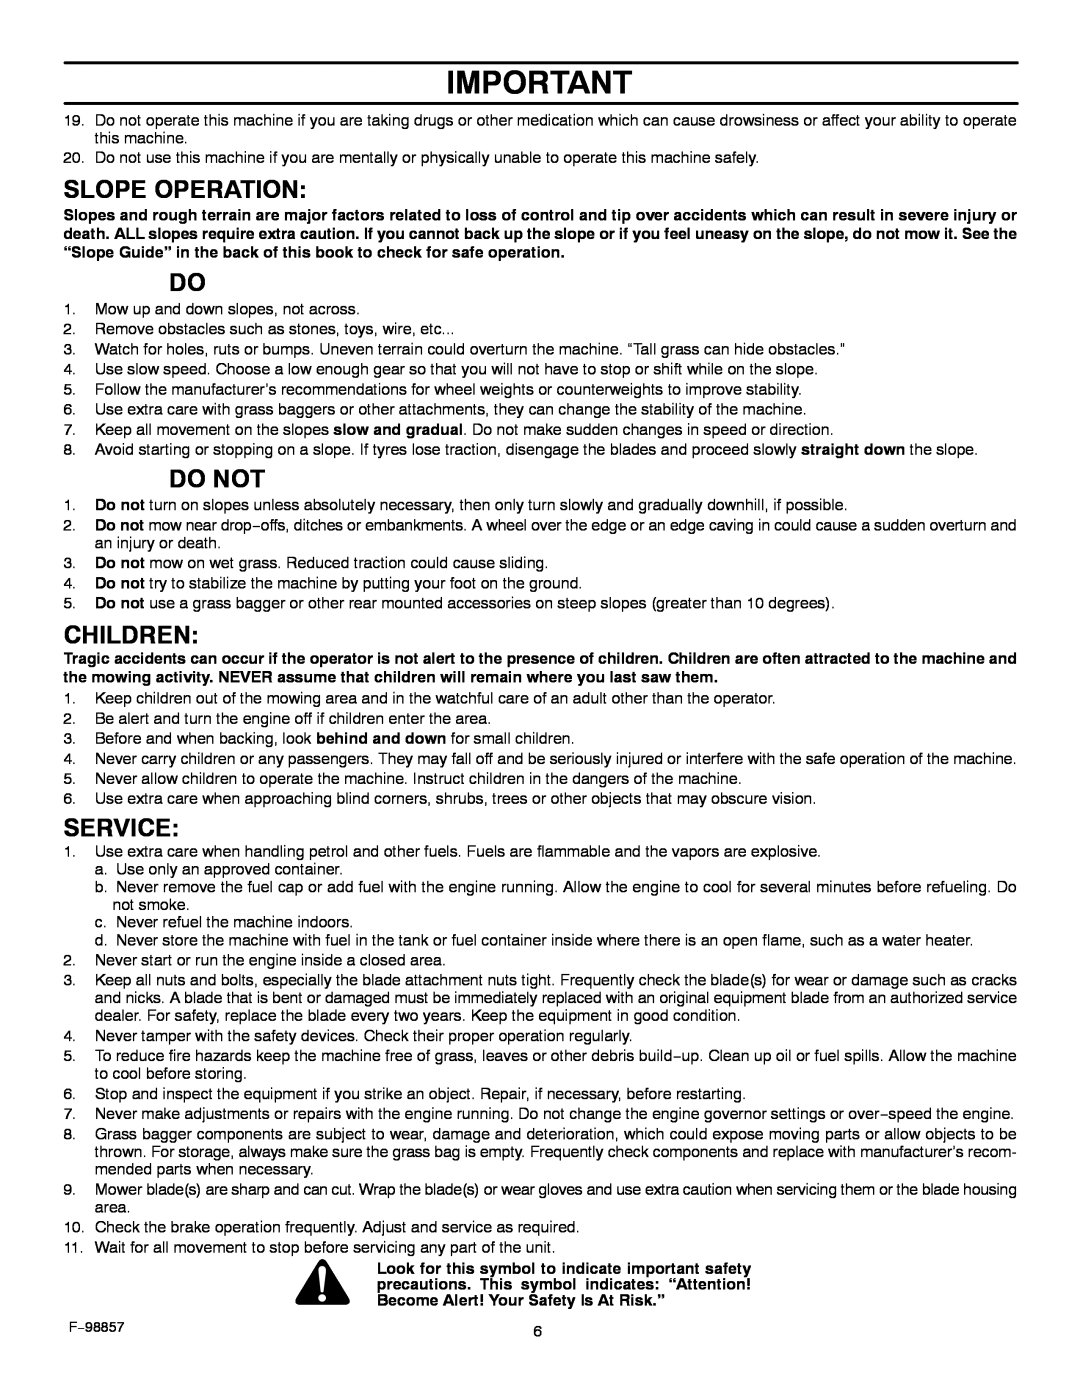 Hayter Mowers 30-Dec manual Slope Operation, Do Not, Children, Service 